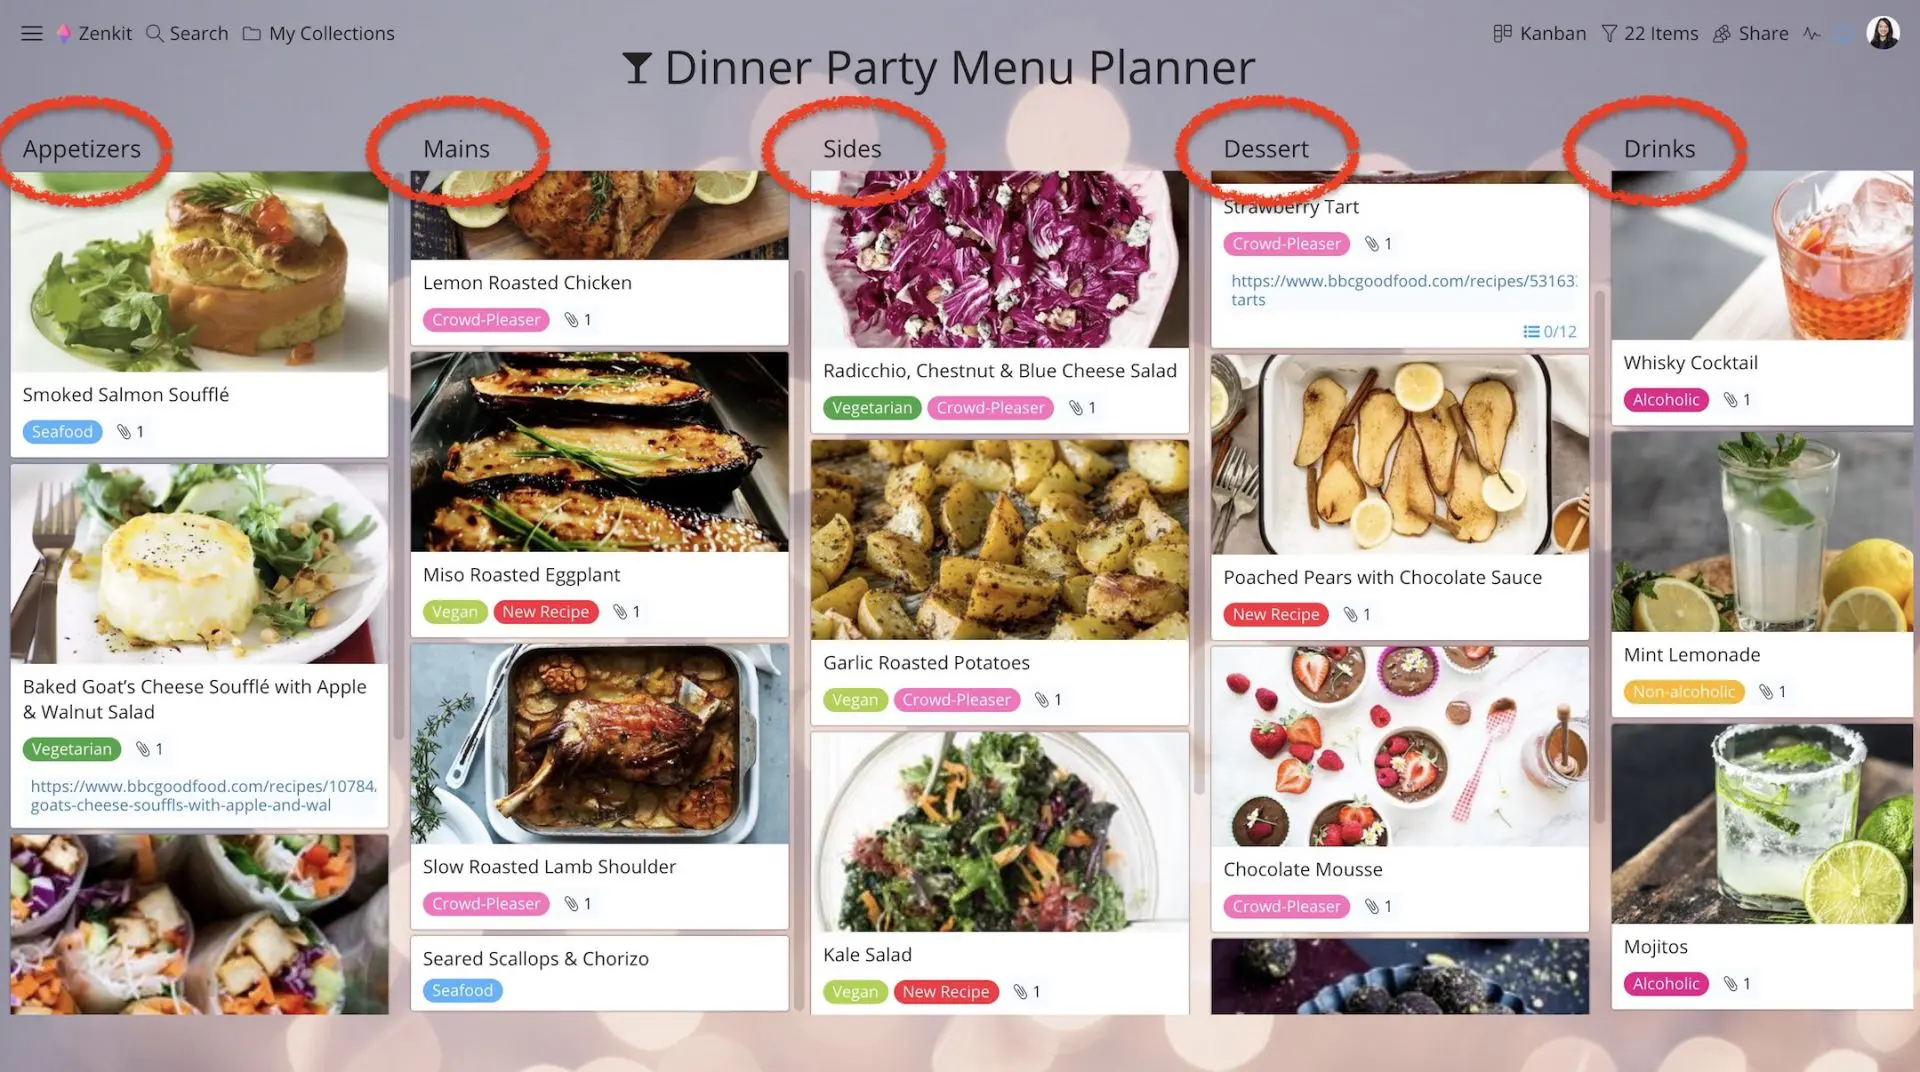 Dinner party menu planner on Zenkit's Kanban board